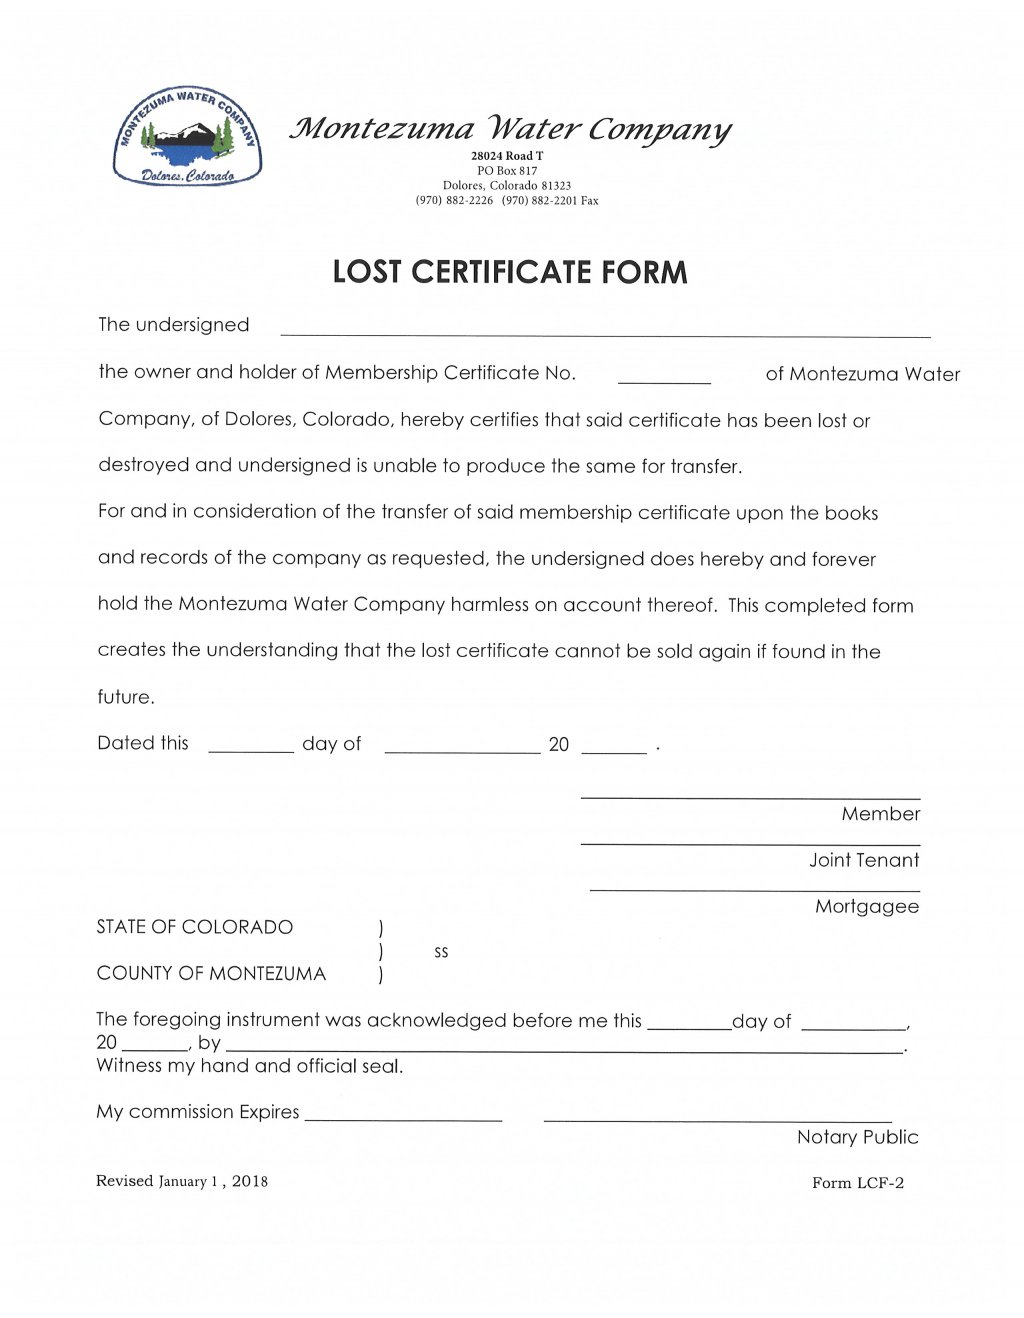 Lost Certificate Form Montezuma Water Company